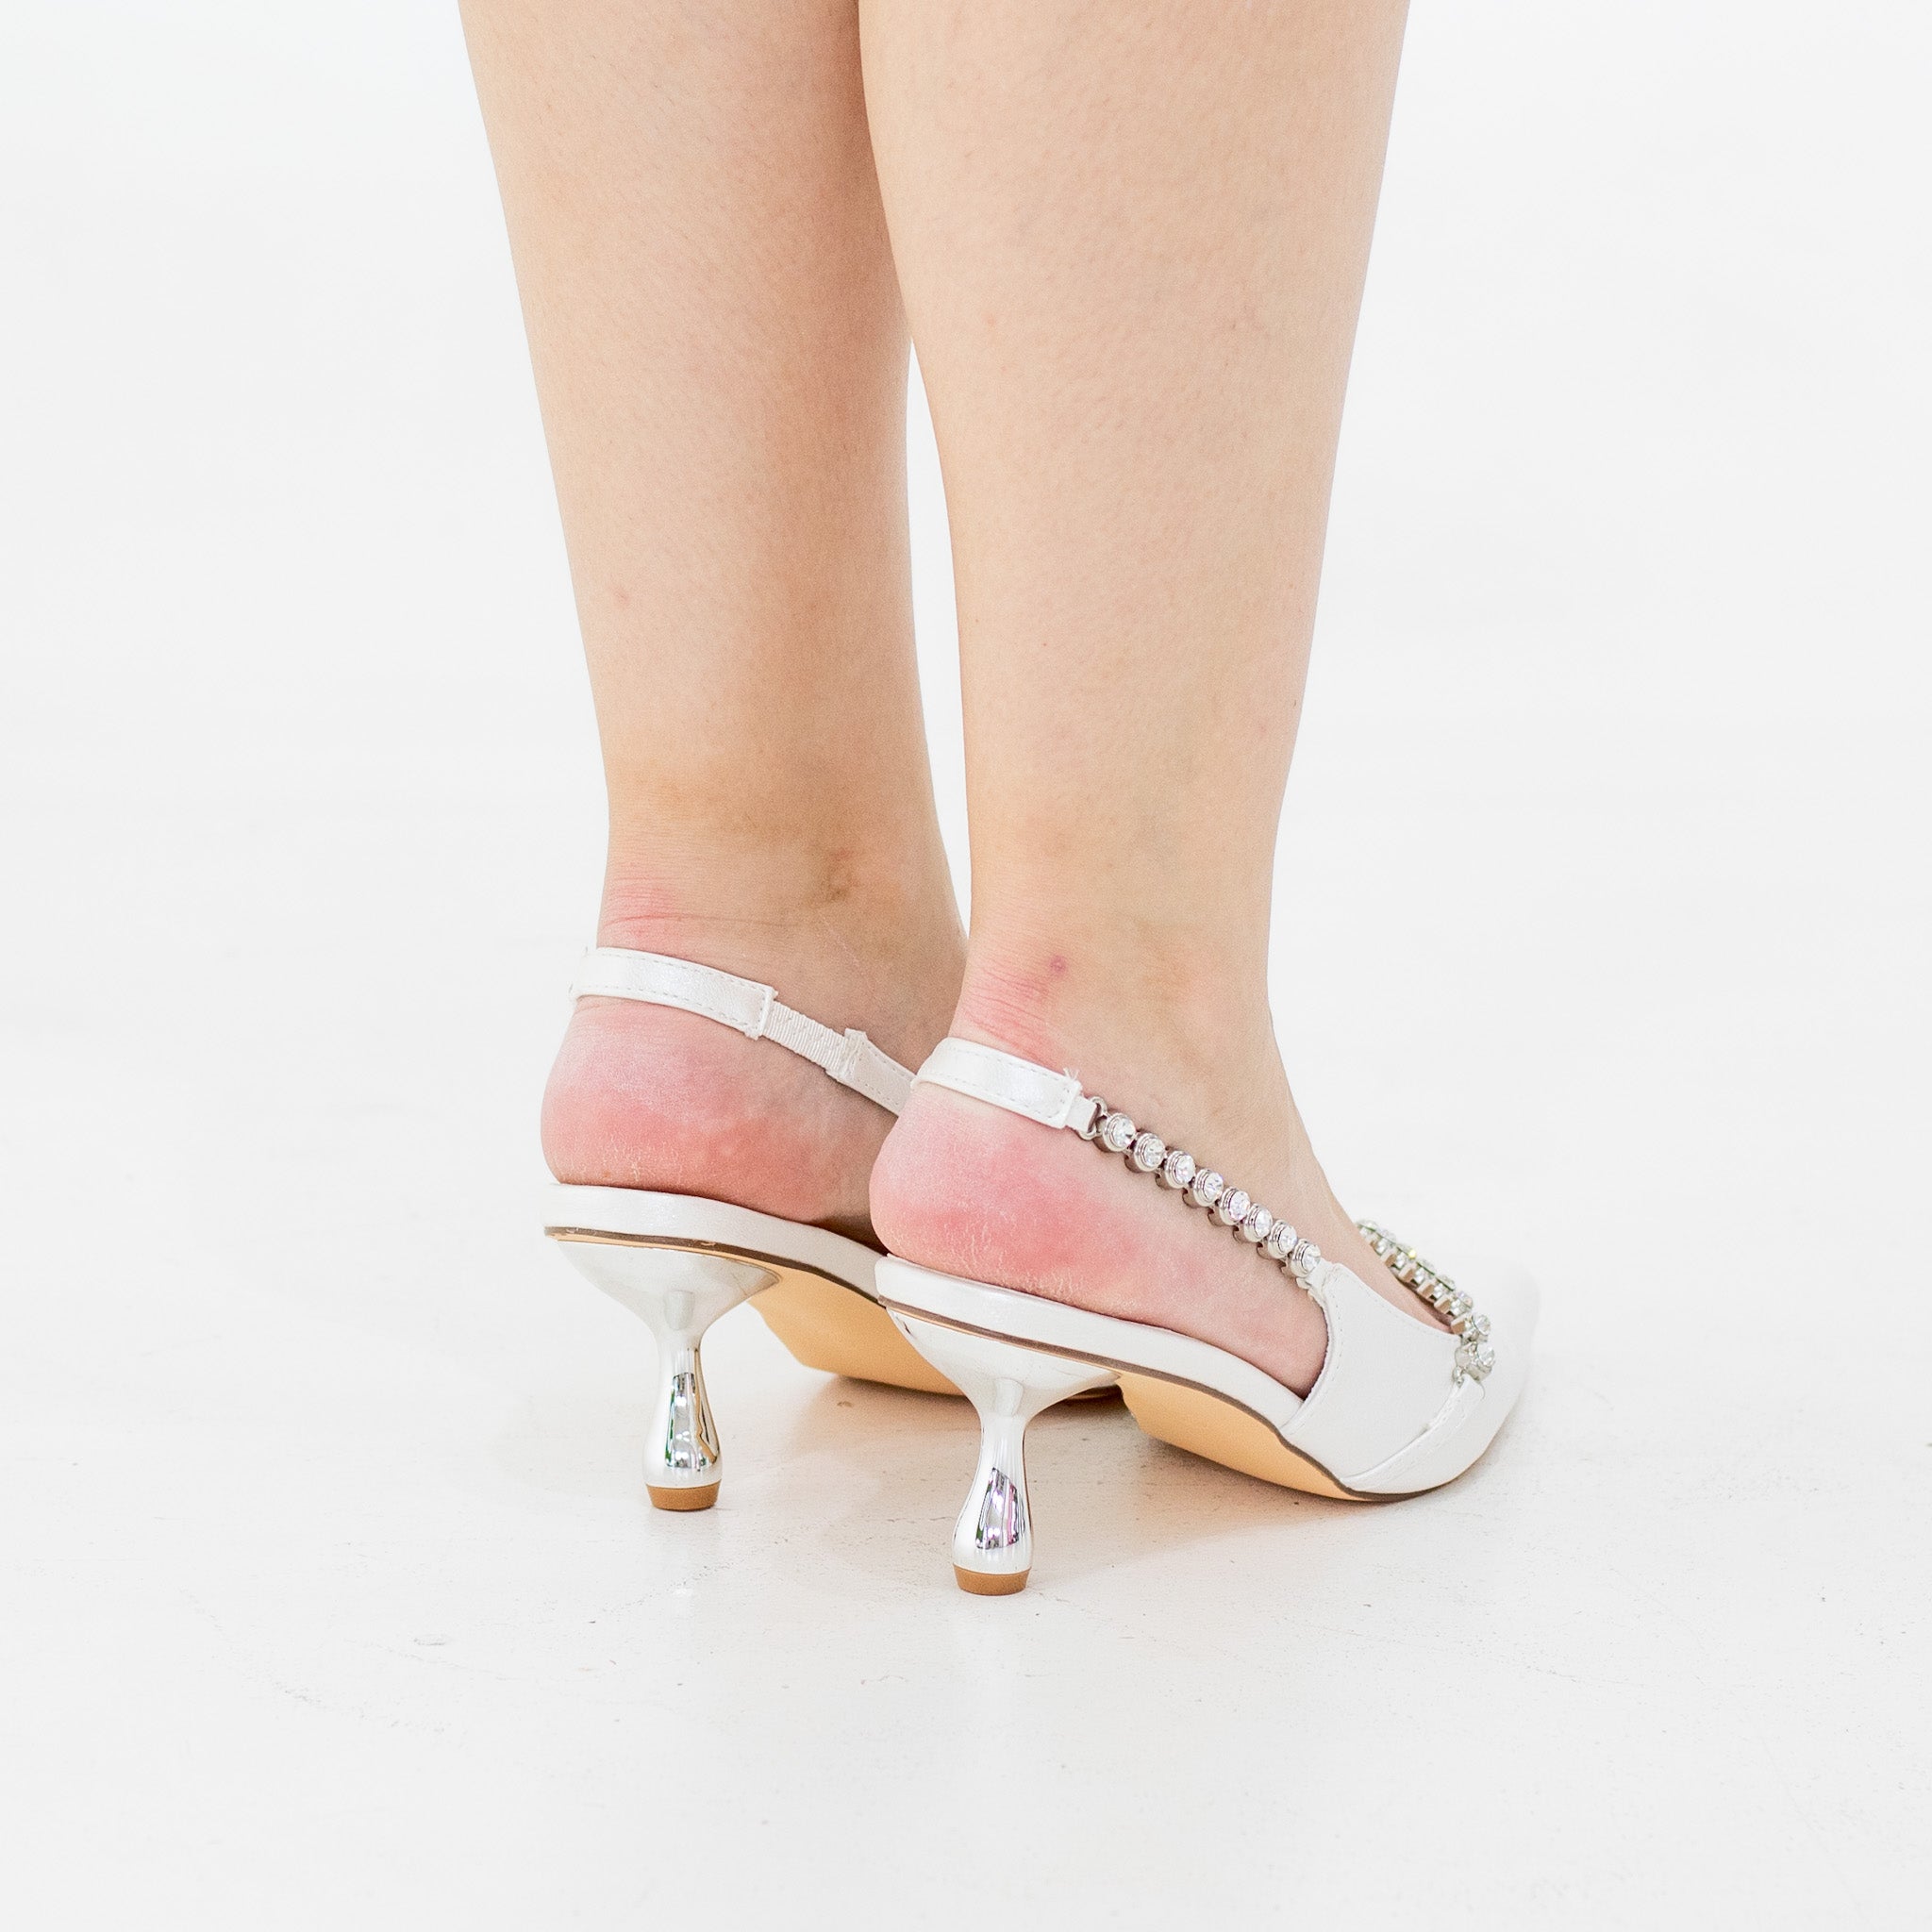 White 6cm heel diamante detailed pointy sling back amana